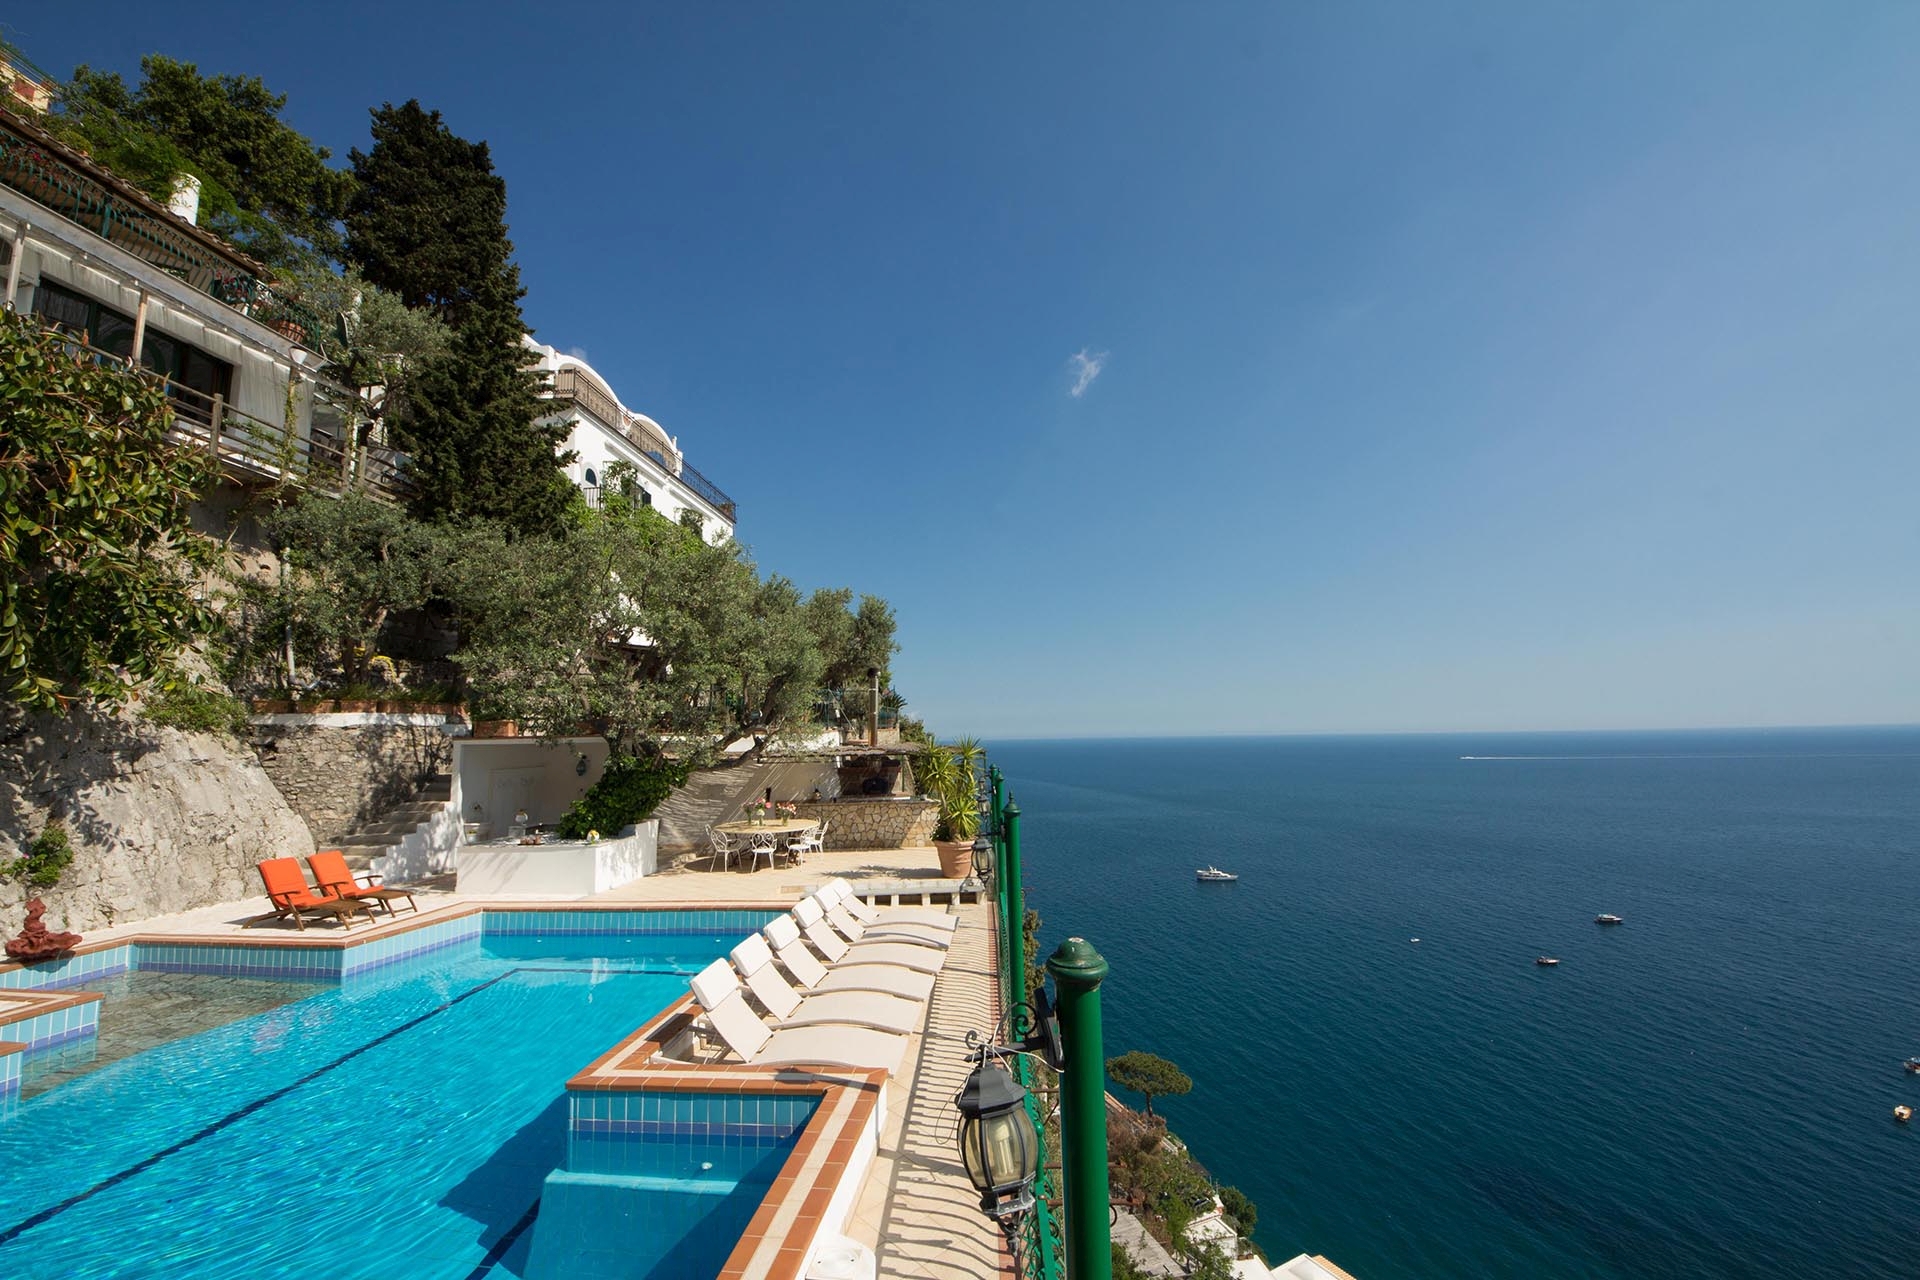 Swimming pool with coastal view from Villa Tuffariello, Amalfi Coast